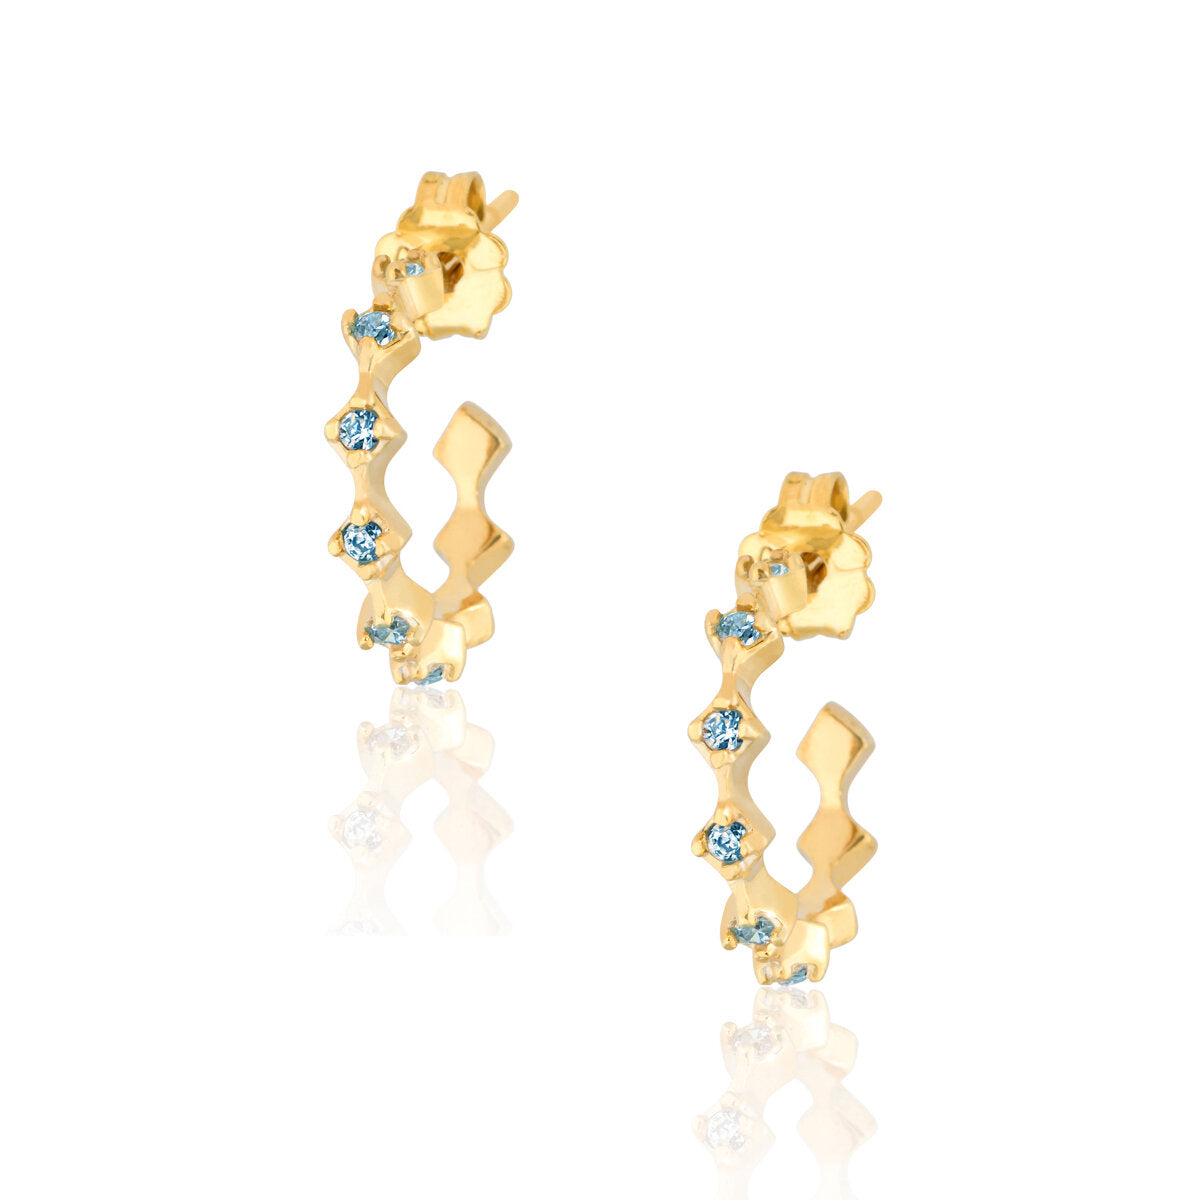 Rhombus Hoops Pair Earrings with aqua stone - Gold Plated